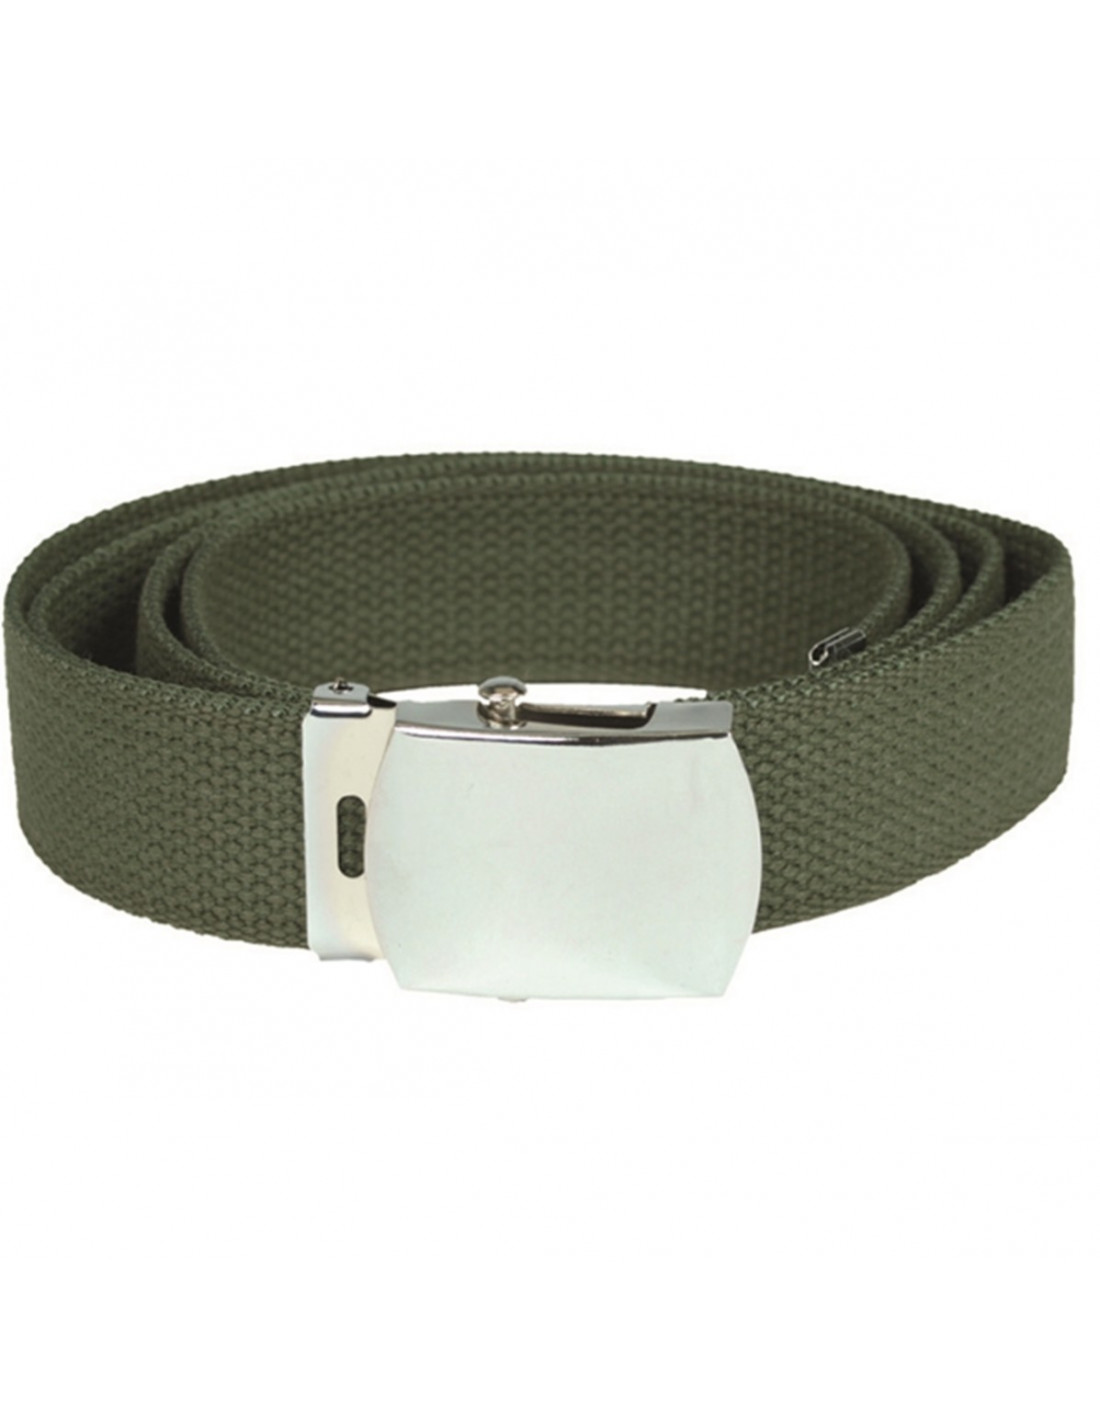 Urban Army Cotton Belt Olive - T13110001